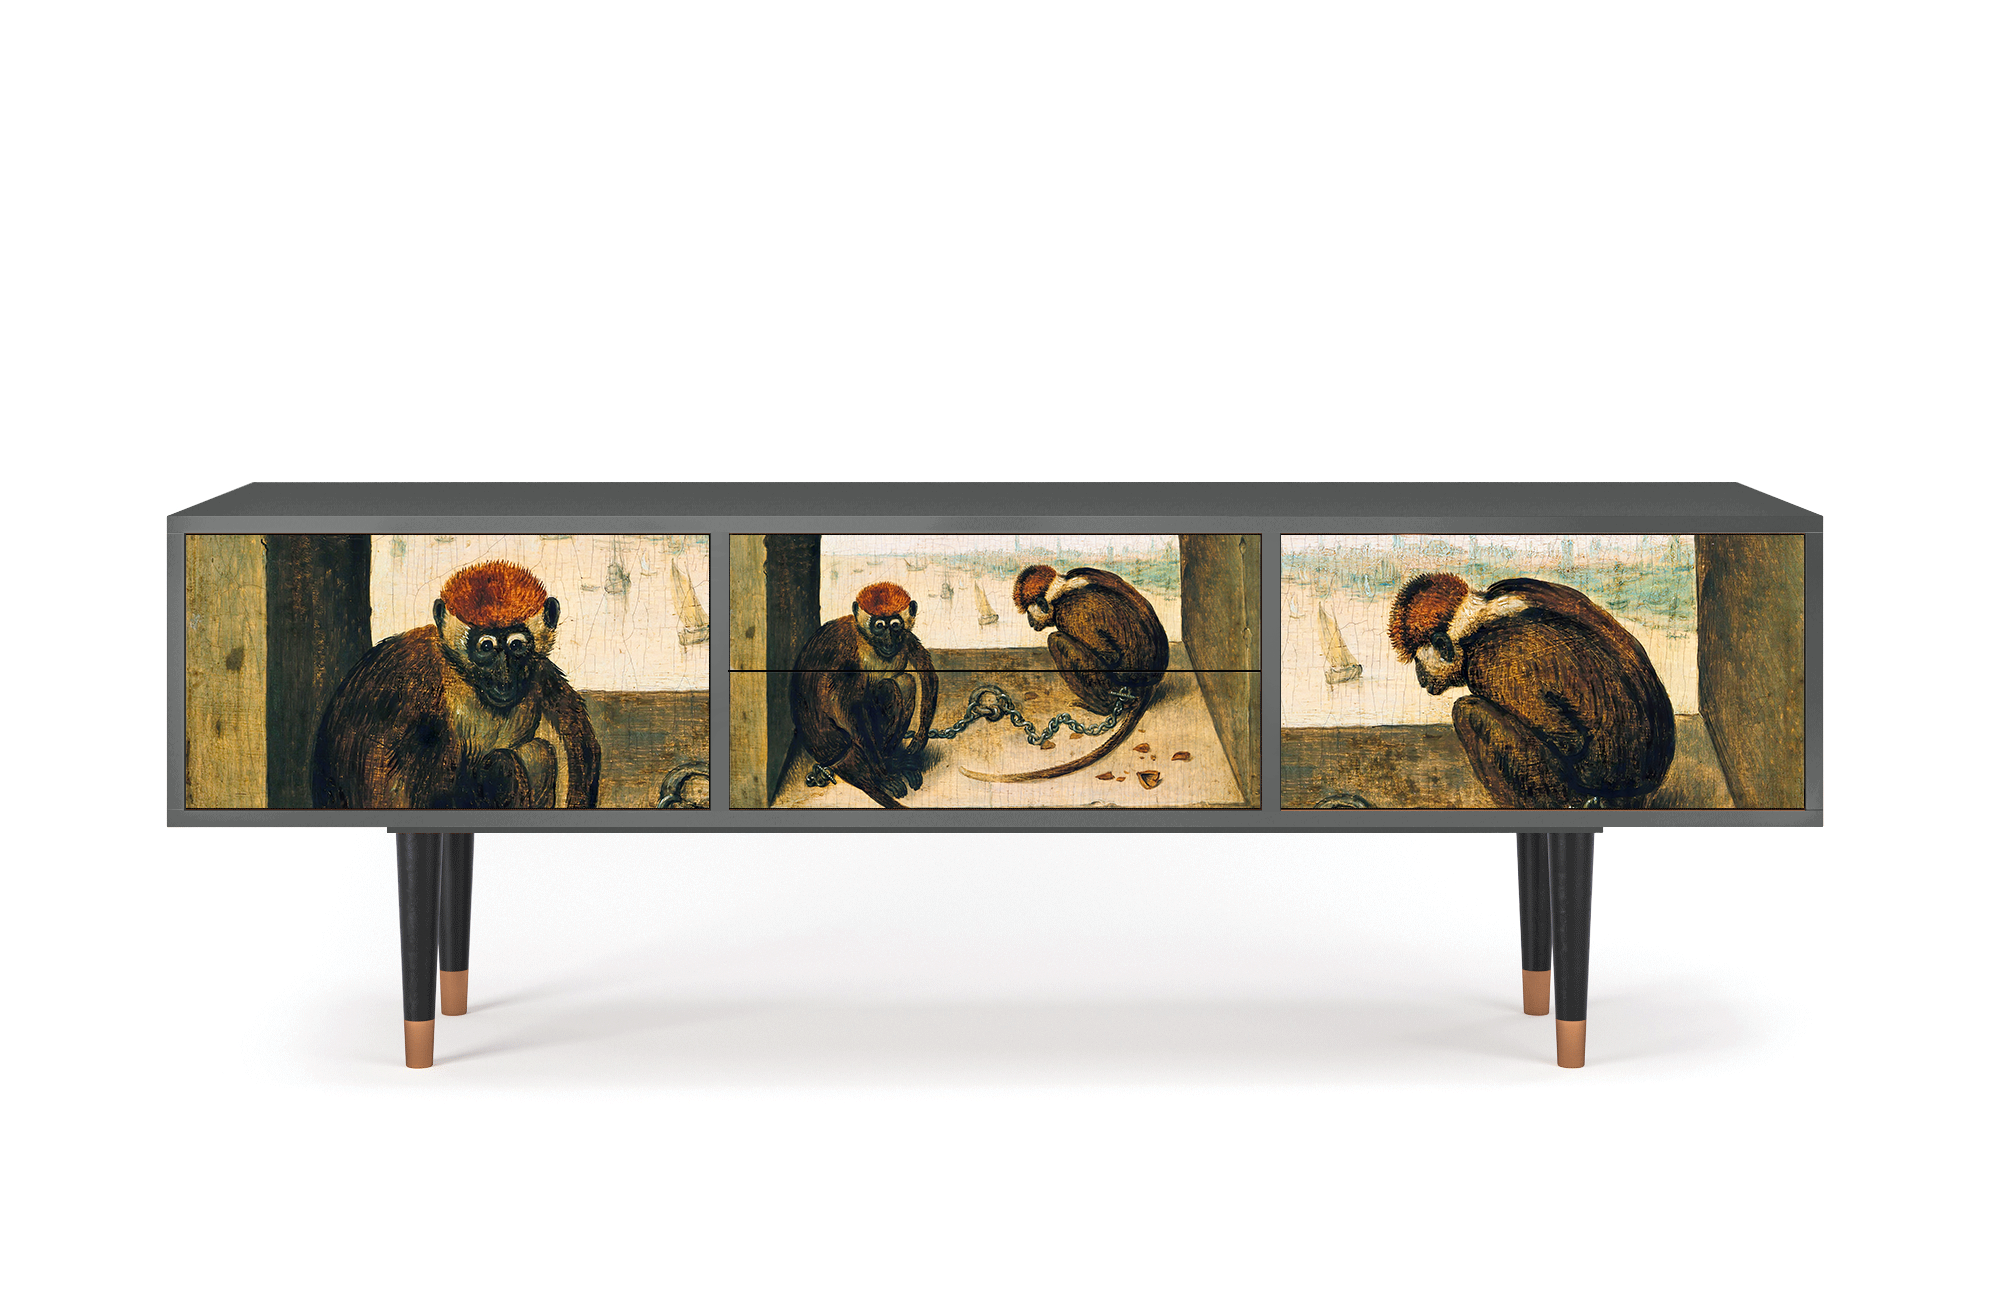 ТВ-Тумба - STORYZ - T4 Two Monkeys by Pieter Bruegel the Elder, 170 x 59 x 48 см, Антрацит - фотография № 2